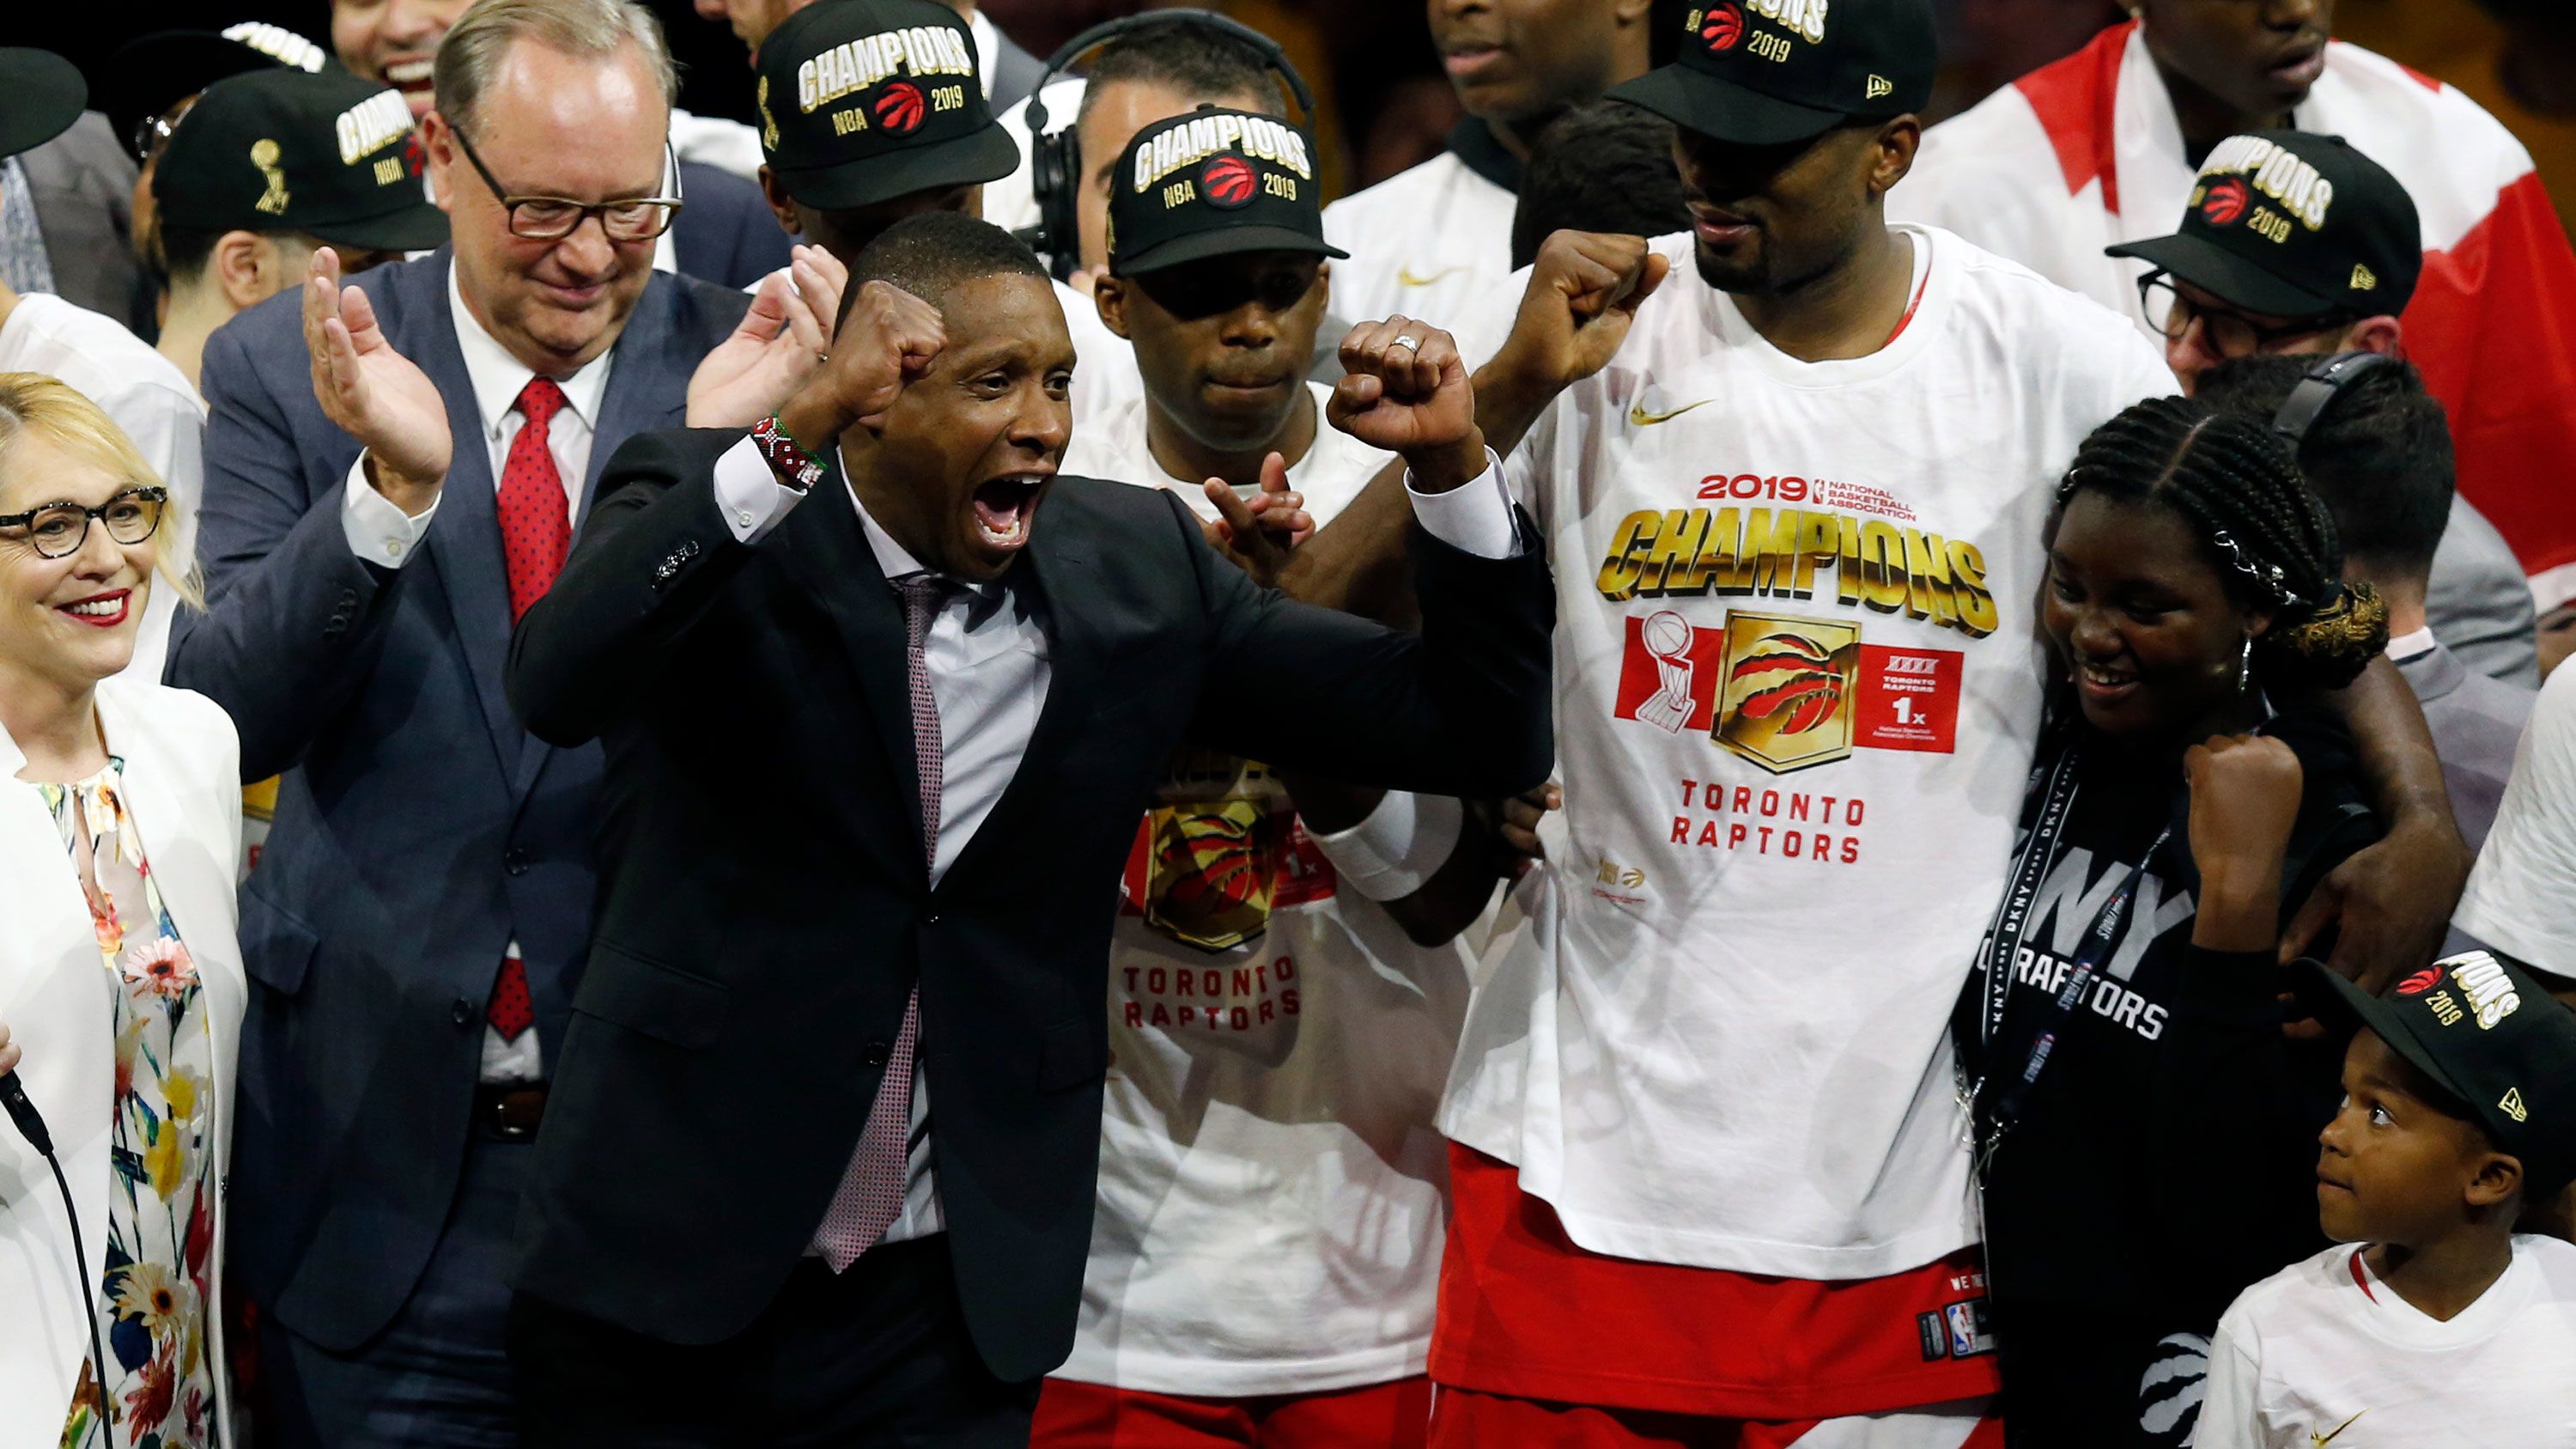 Toronto Raptors president Masai Ujiri calls for racial equality after NBA  Finals incident - ABC News